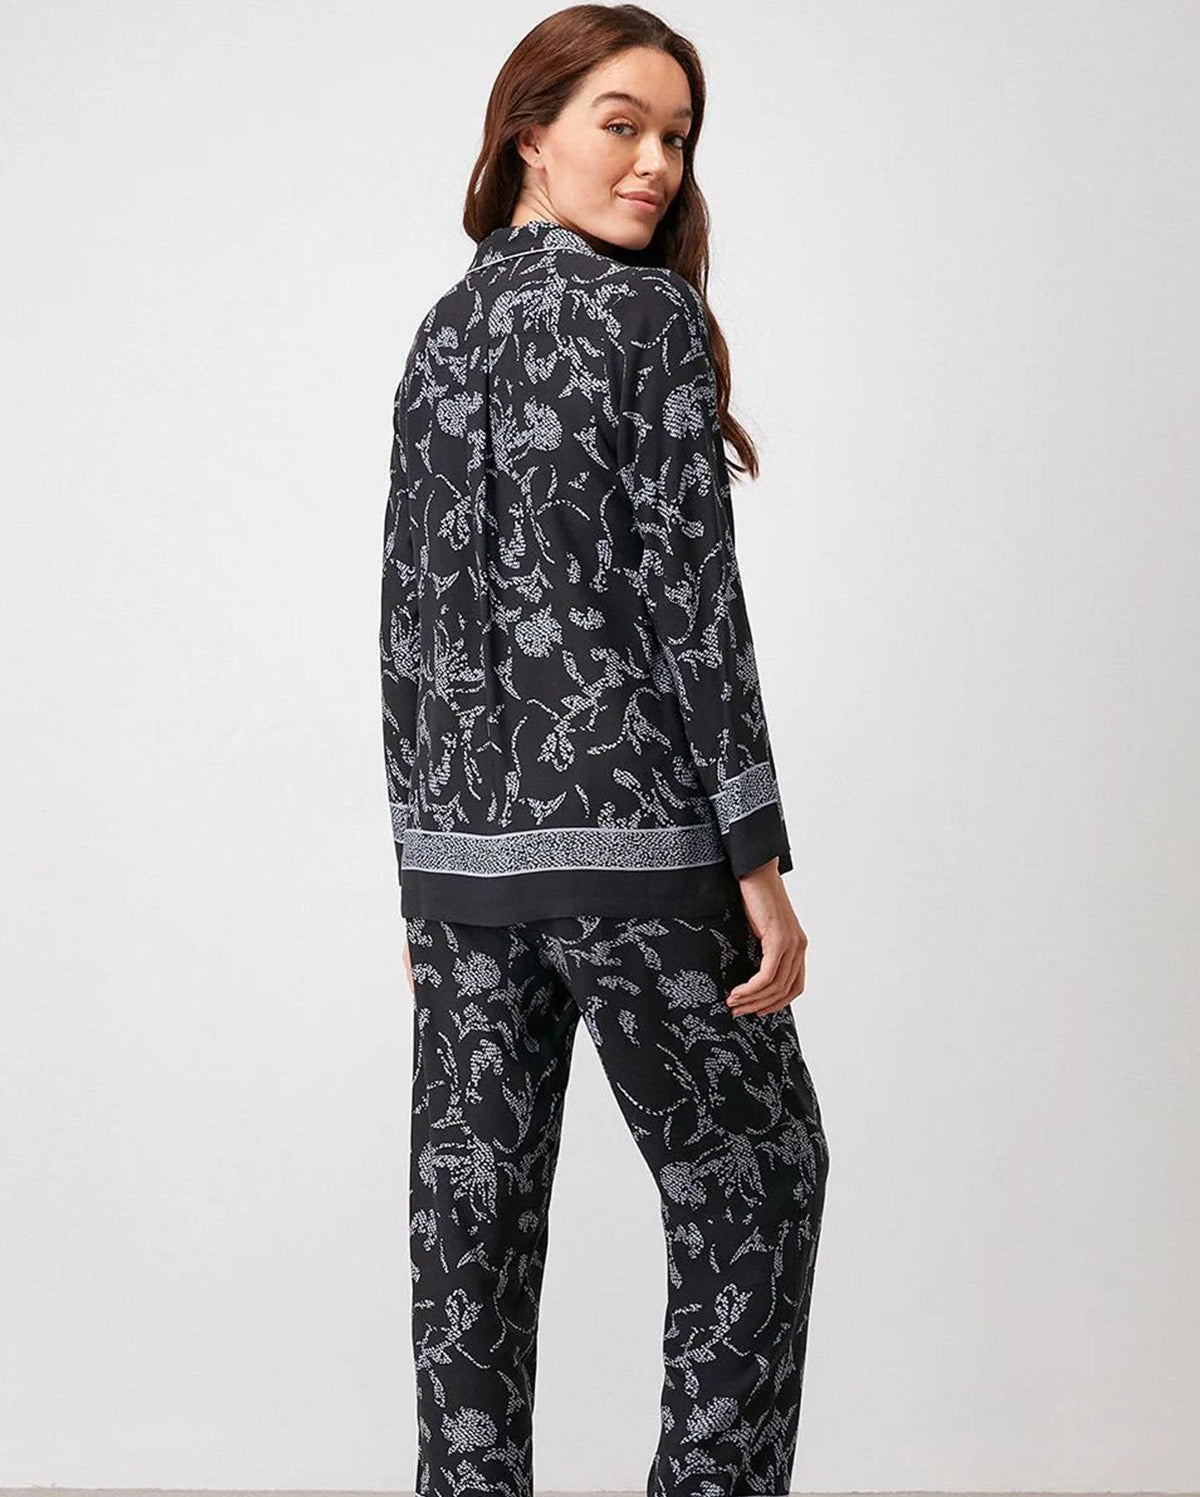 Patterned Pyjama Set - Black & White